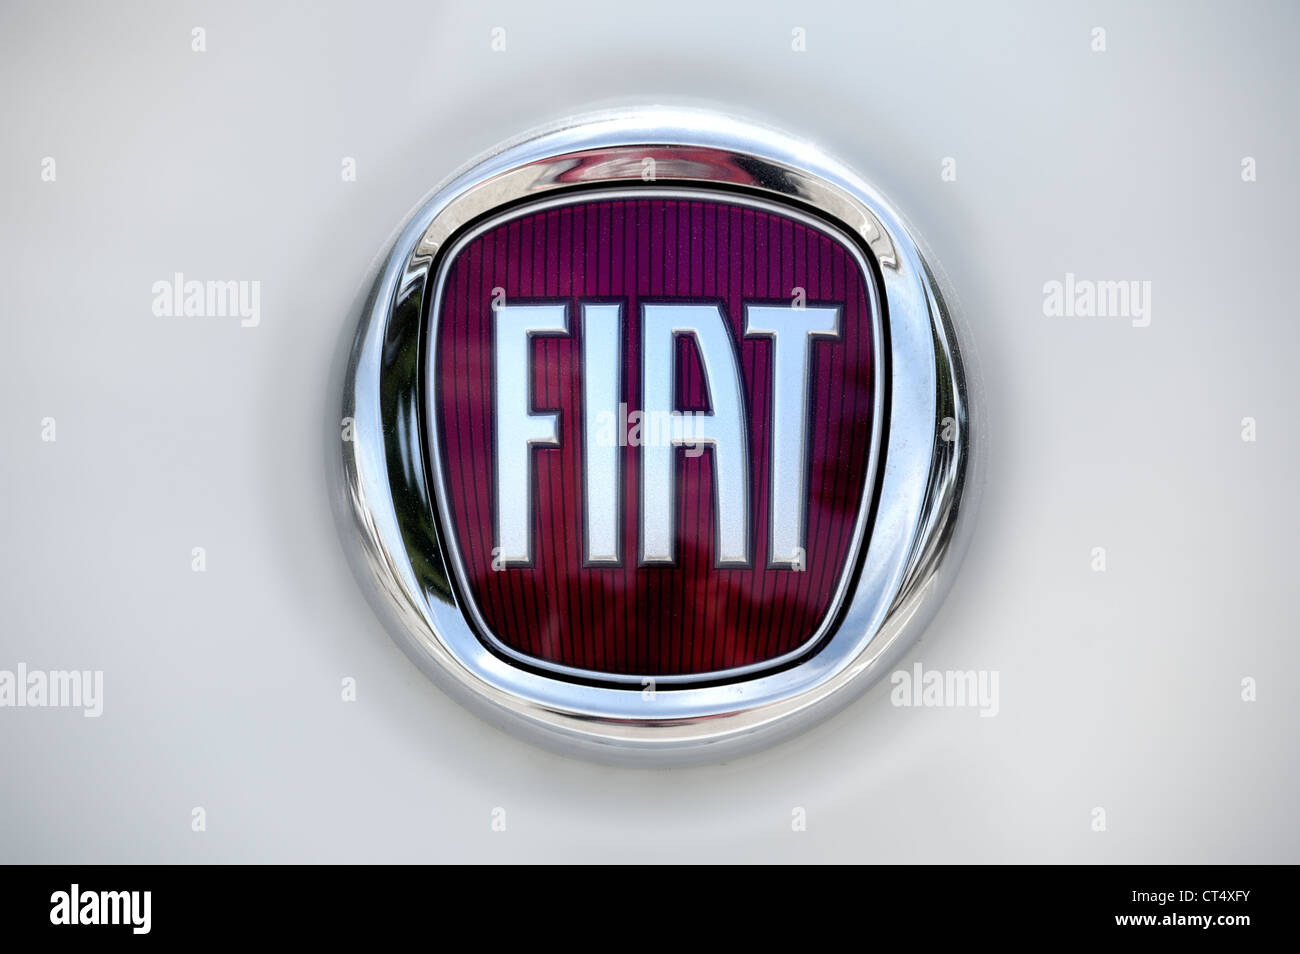 fiat car logo close up Stock Photo